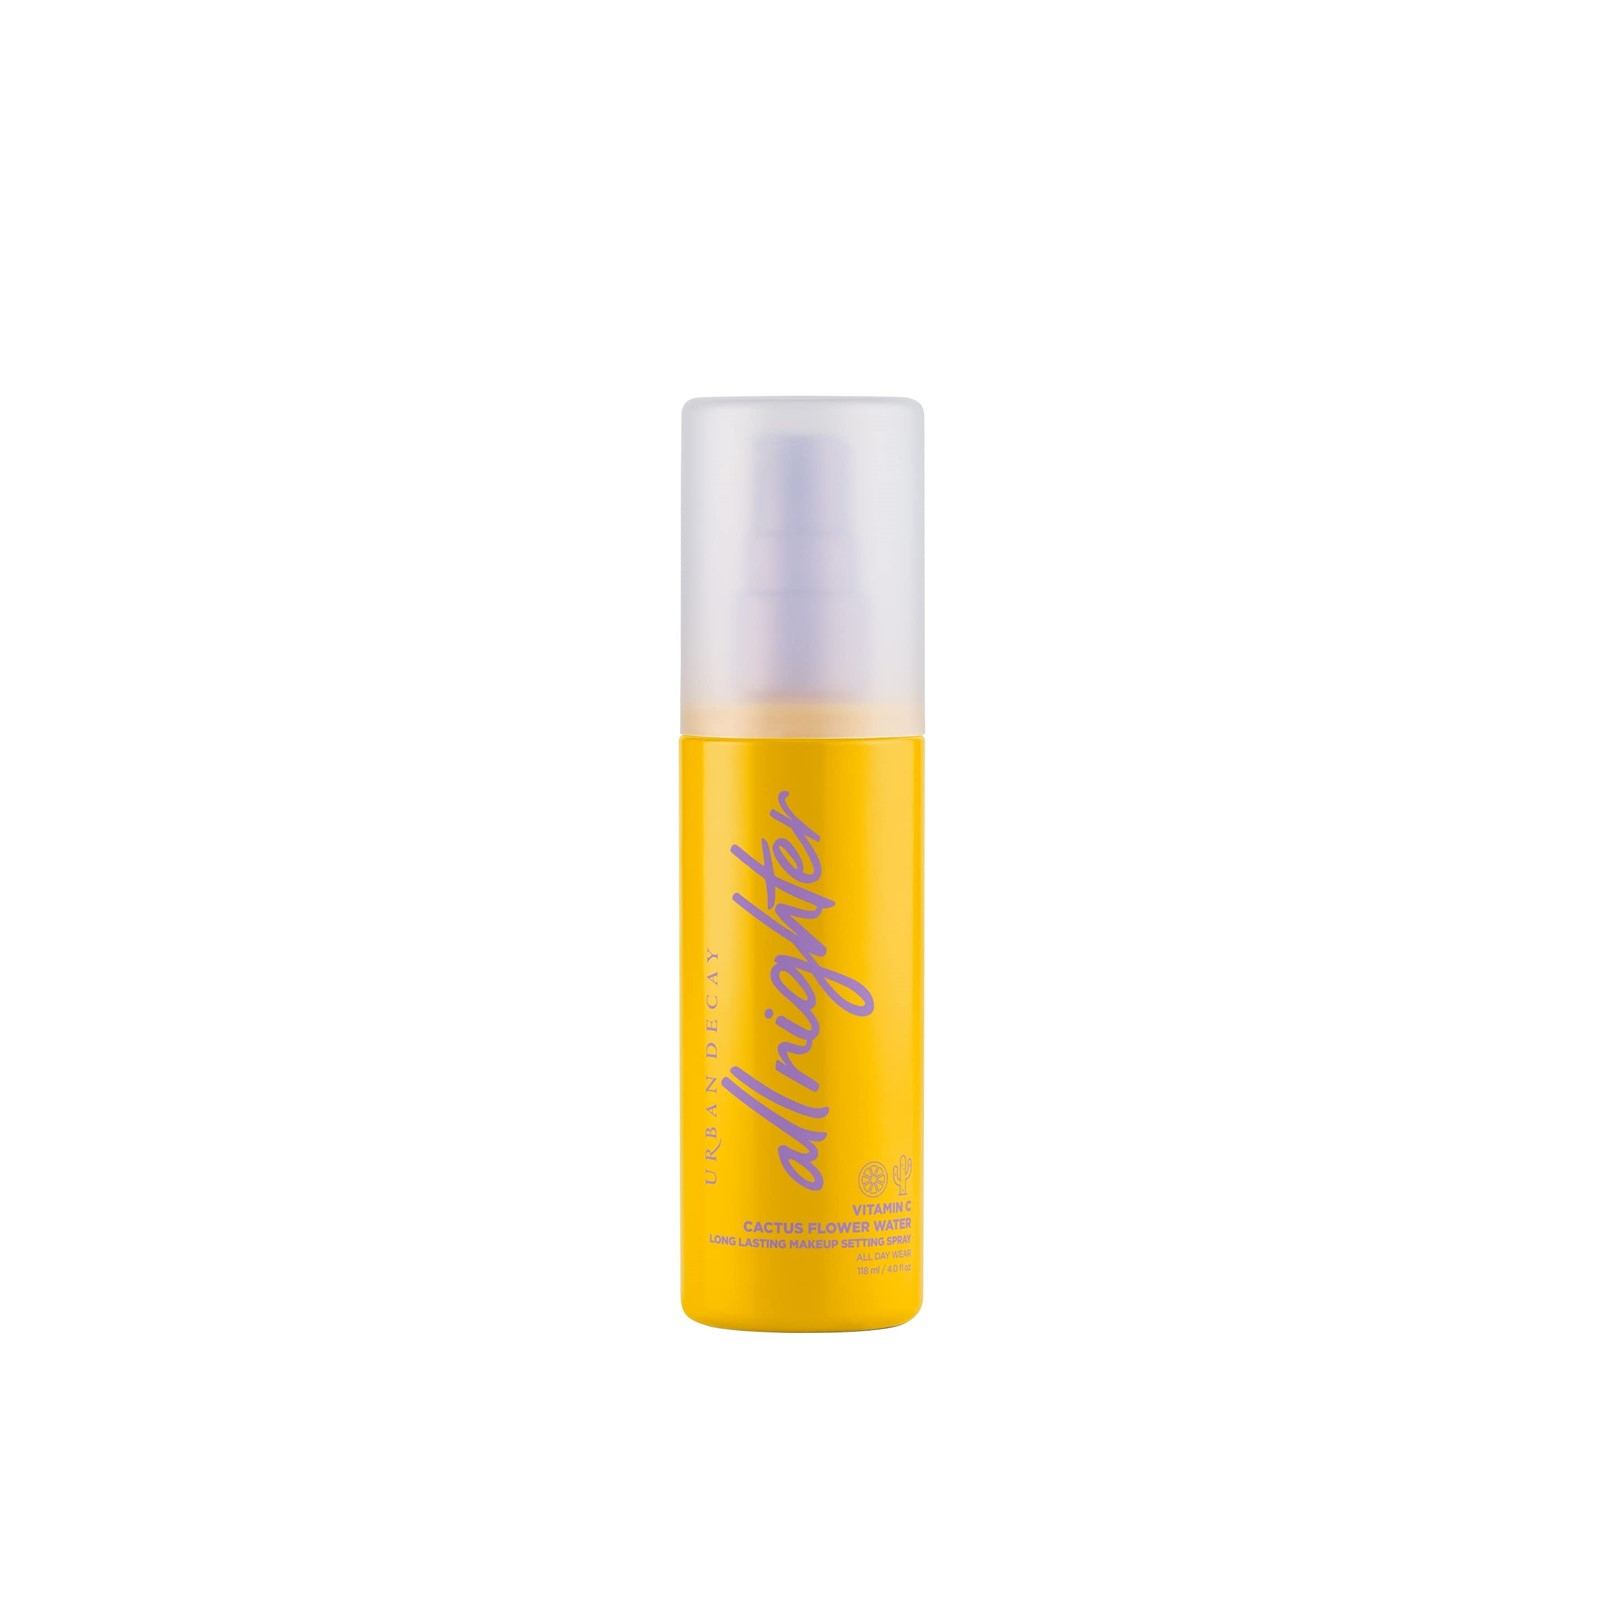 Buy Urban Decay All Nighter Vitamin C Long Makeup Setting Spray 118ml fl oz) ·